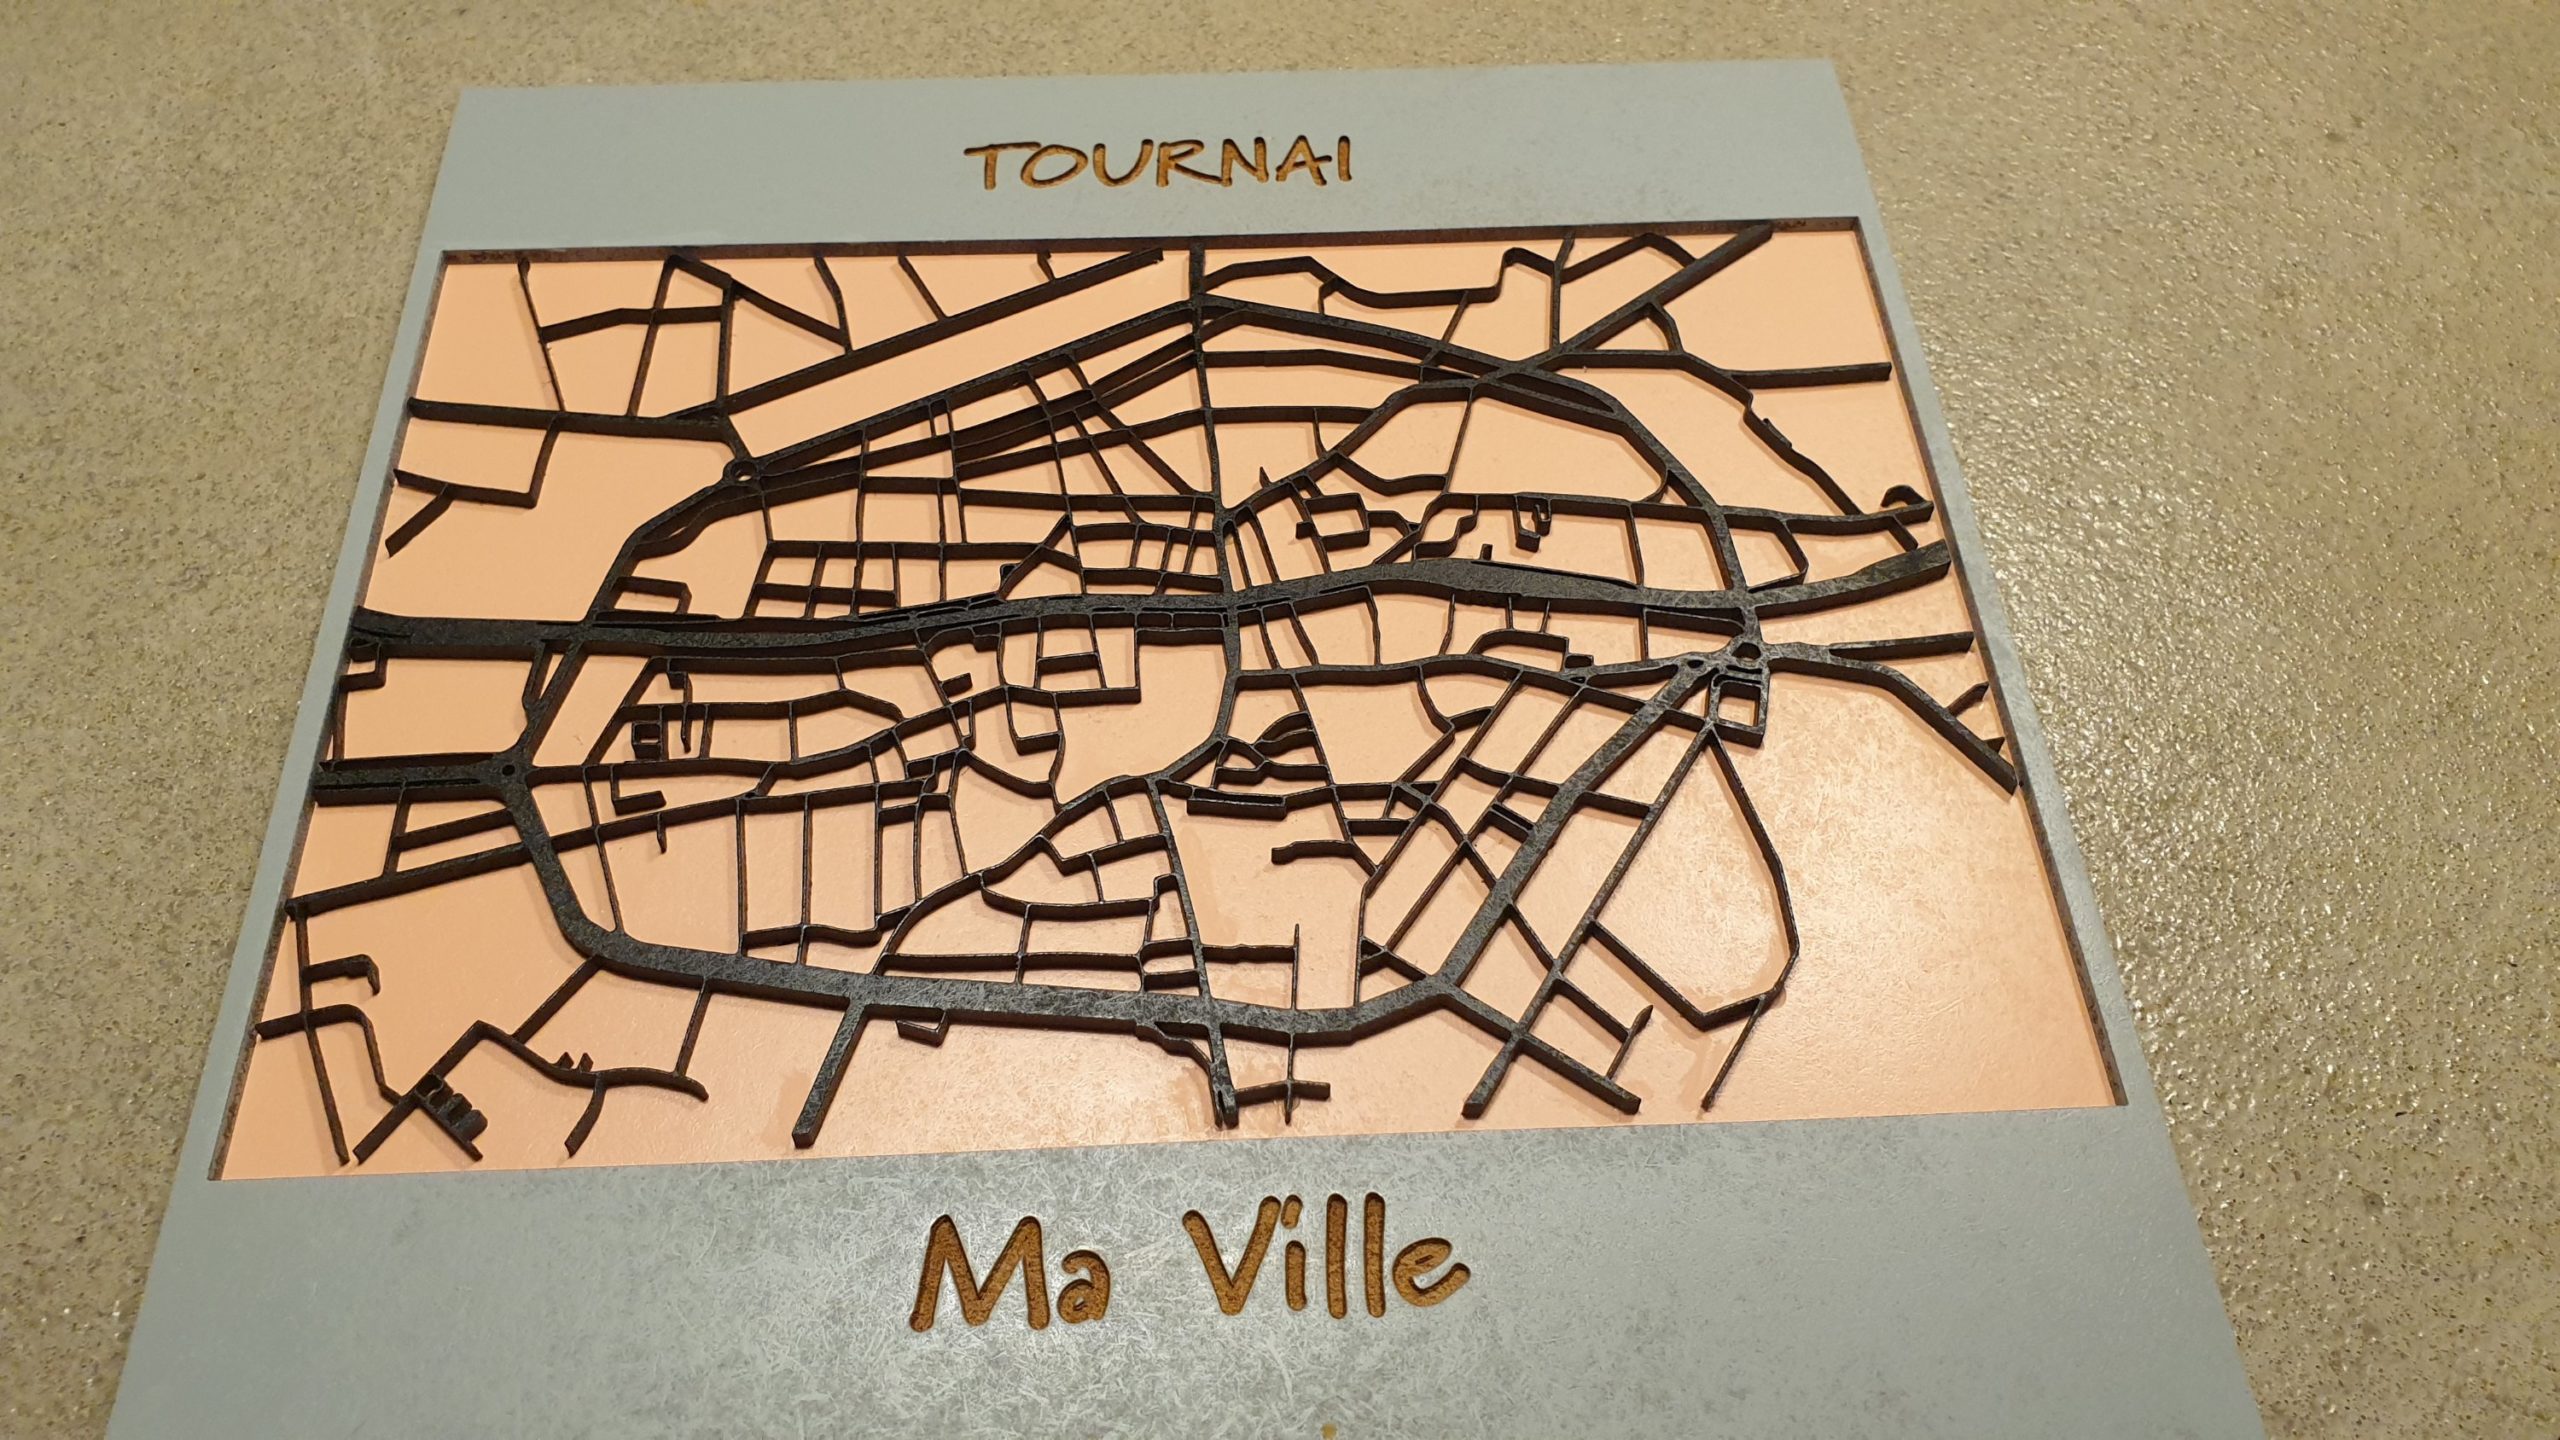 Plan de la ville de Tournai